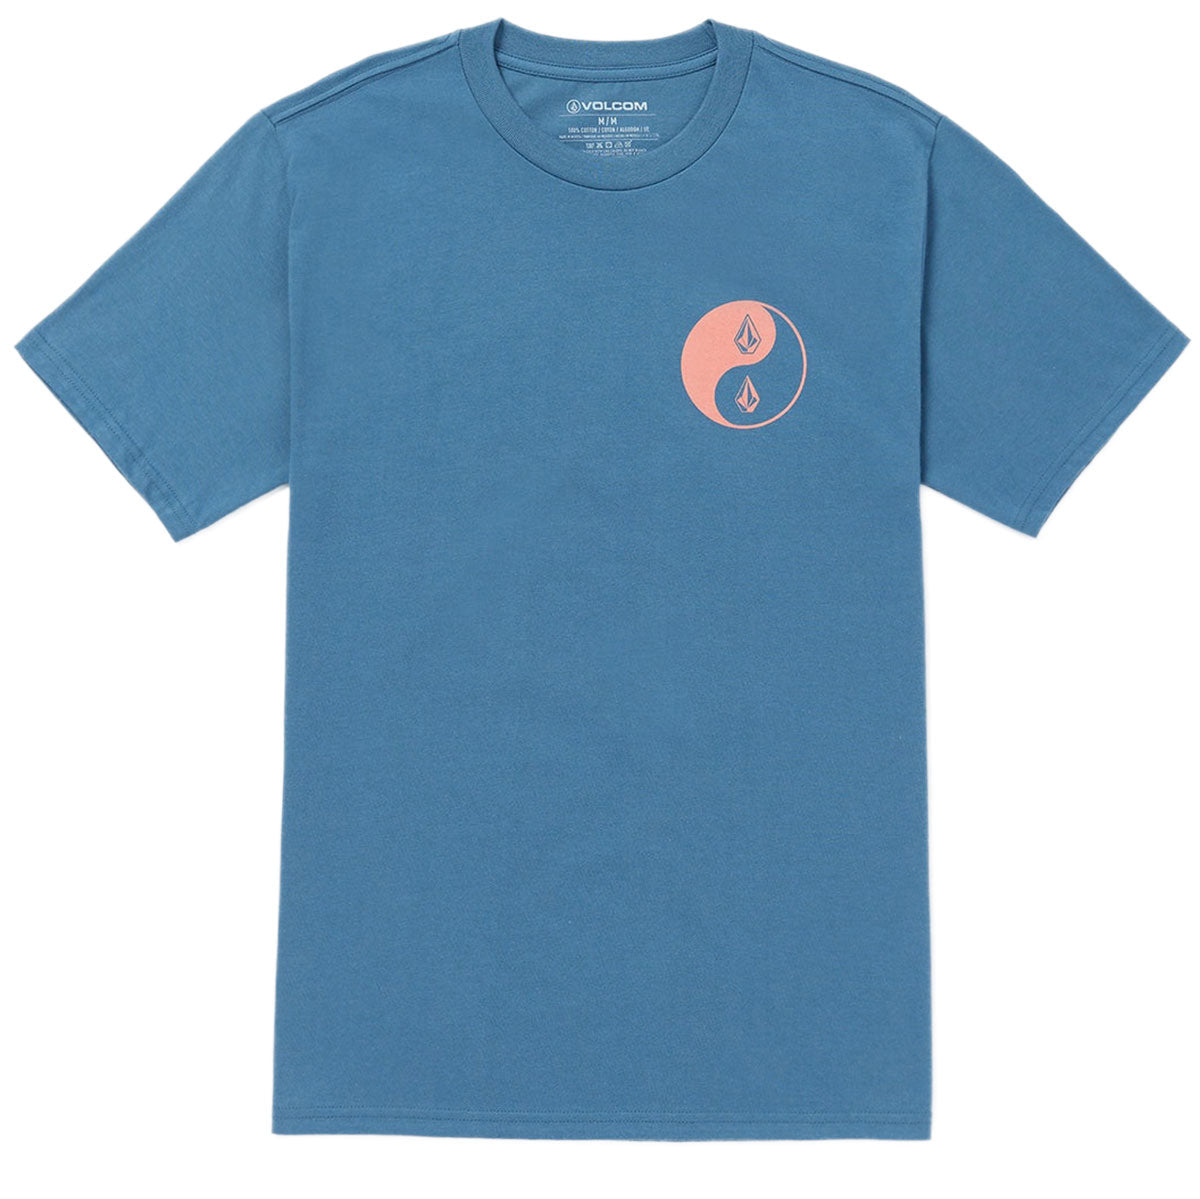 Volcom Counterbalance T-Shirt - Dark Blue image 1